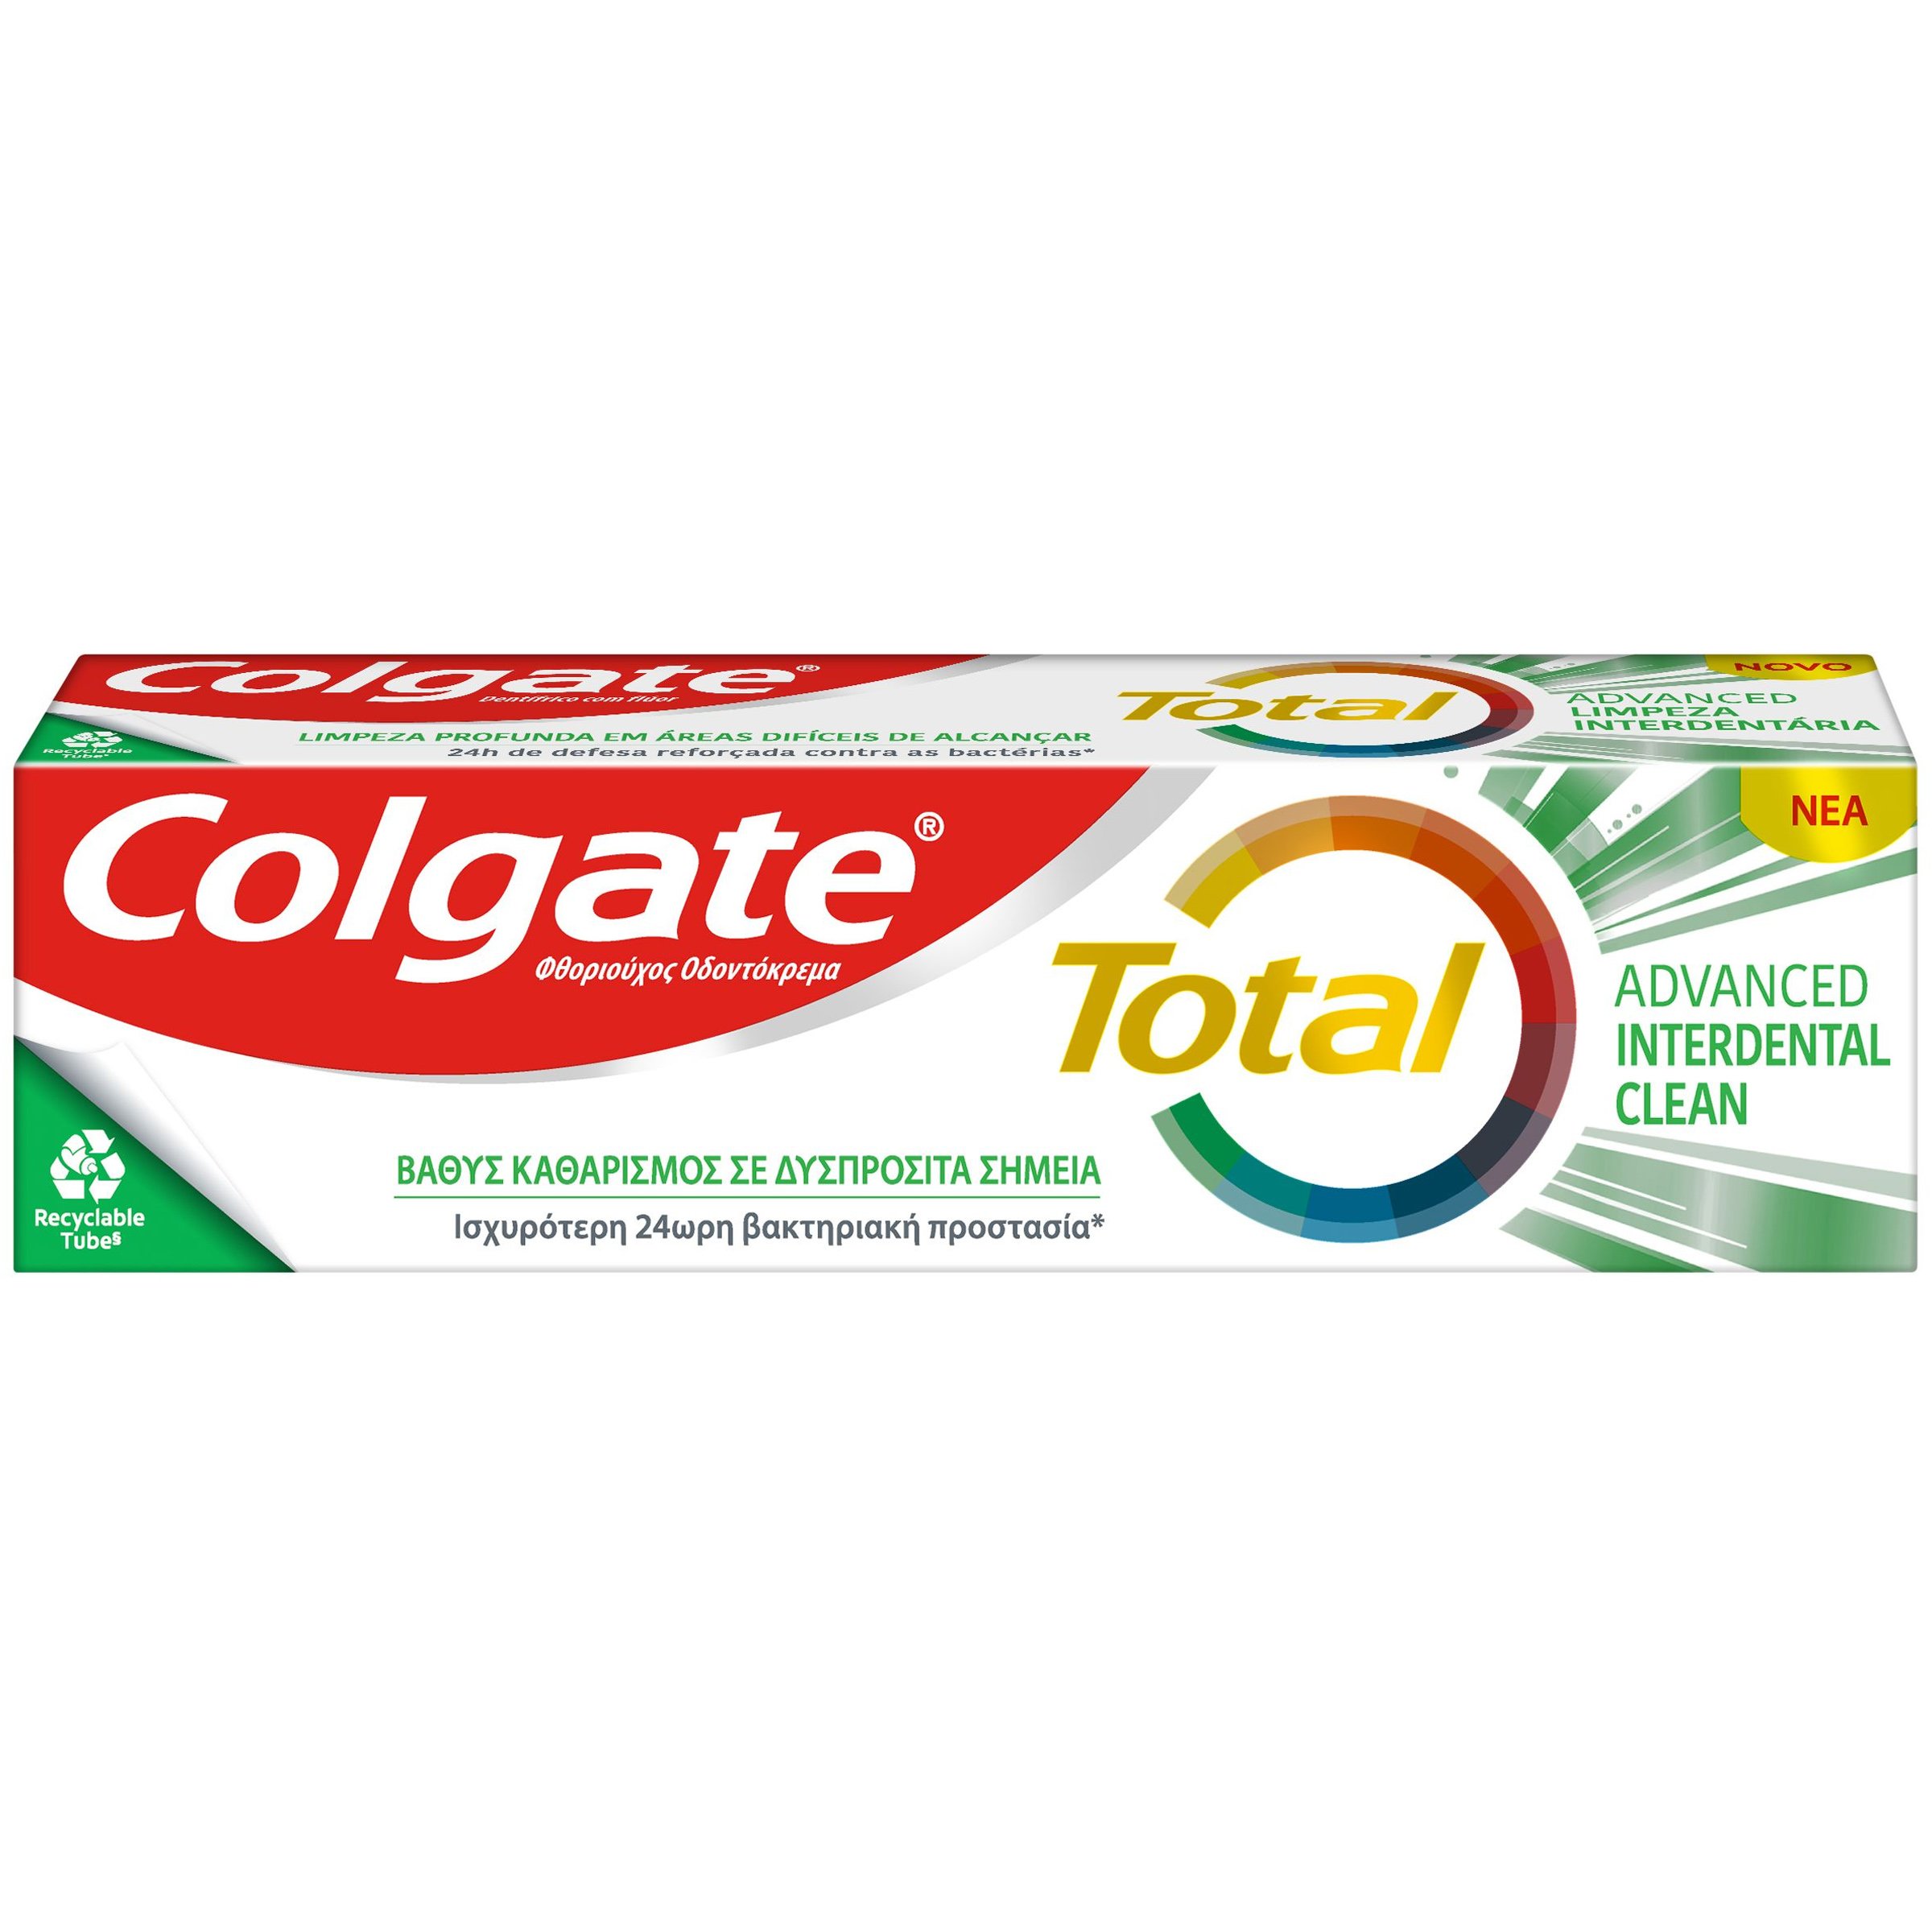 Colgate Total Advanced Interdental Clean Οδοντόκρεμα για Βαθύ Καθαρισμό σε Δυσπρόσιτα Σημεία & 24ωρη Βακτηριακή Προστασία 75ml